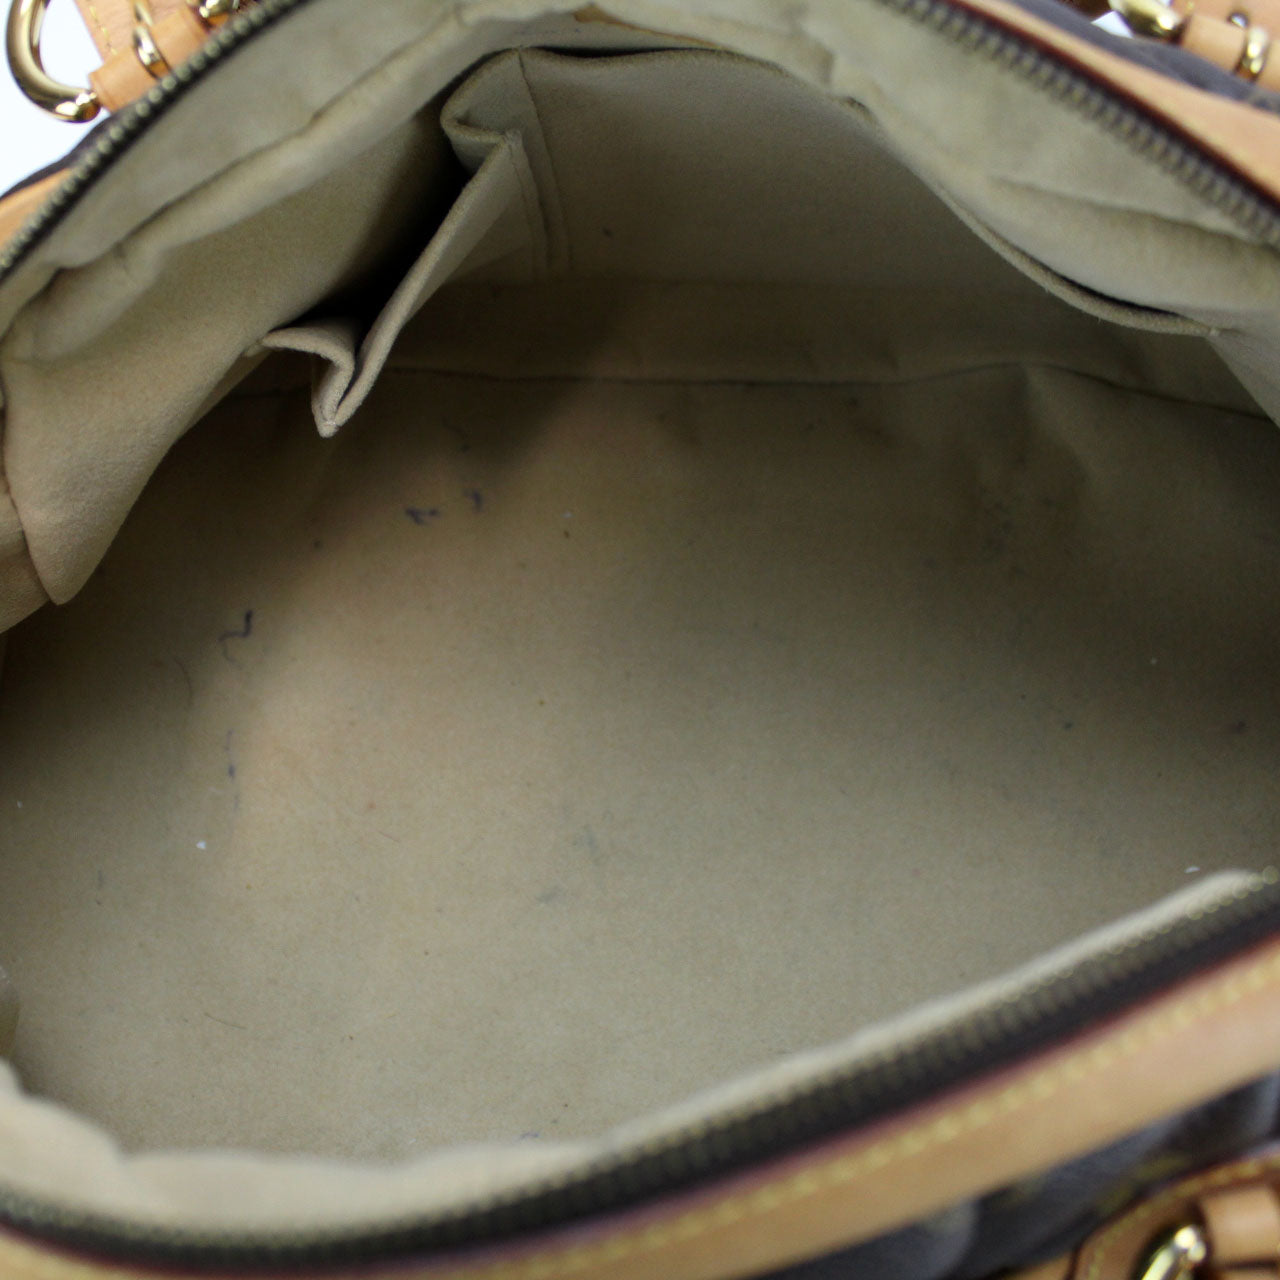 Louis Vuitton Etoile Handbag 371603